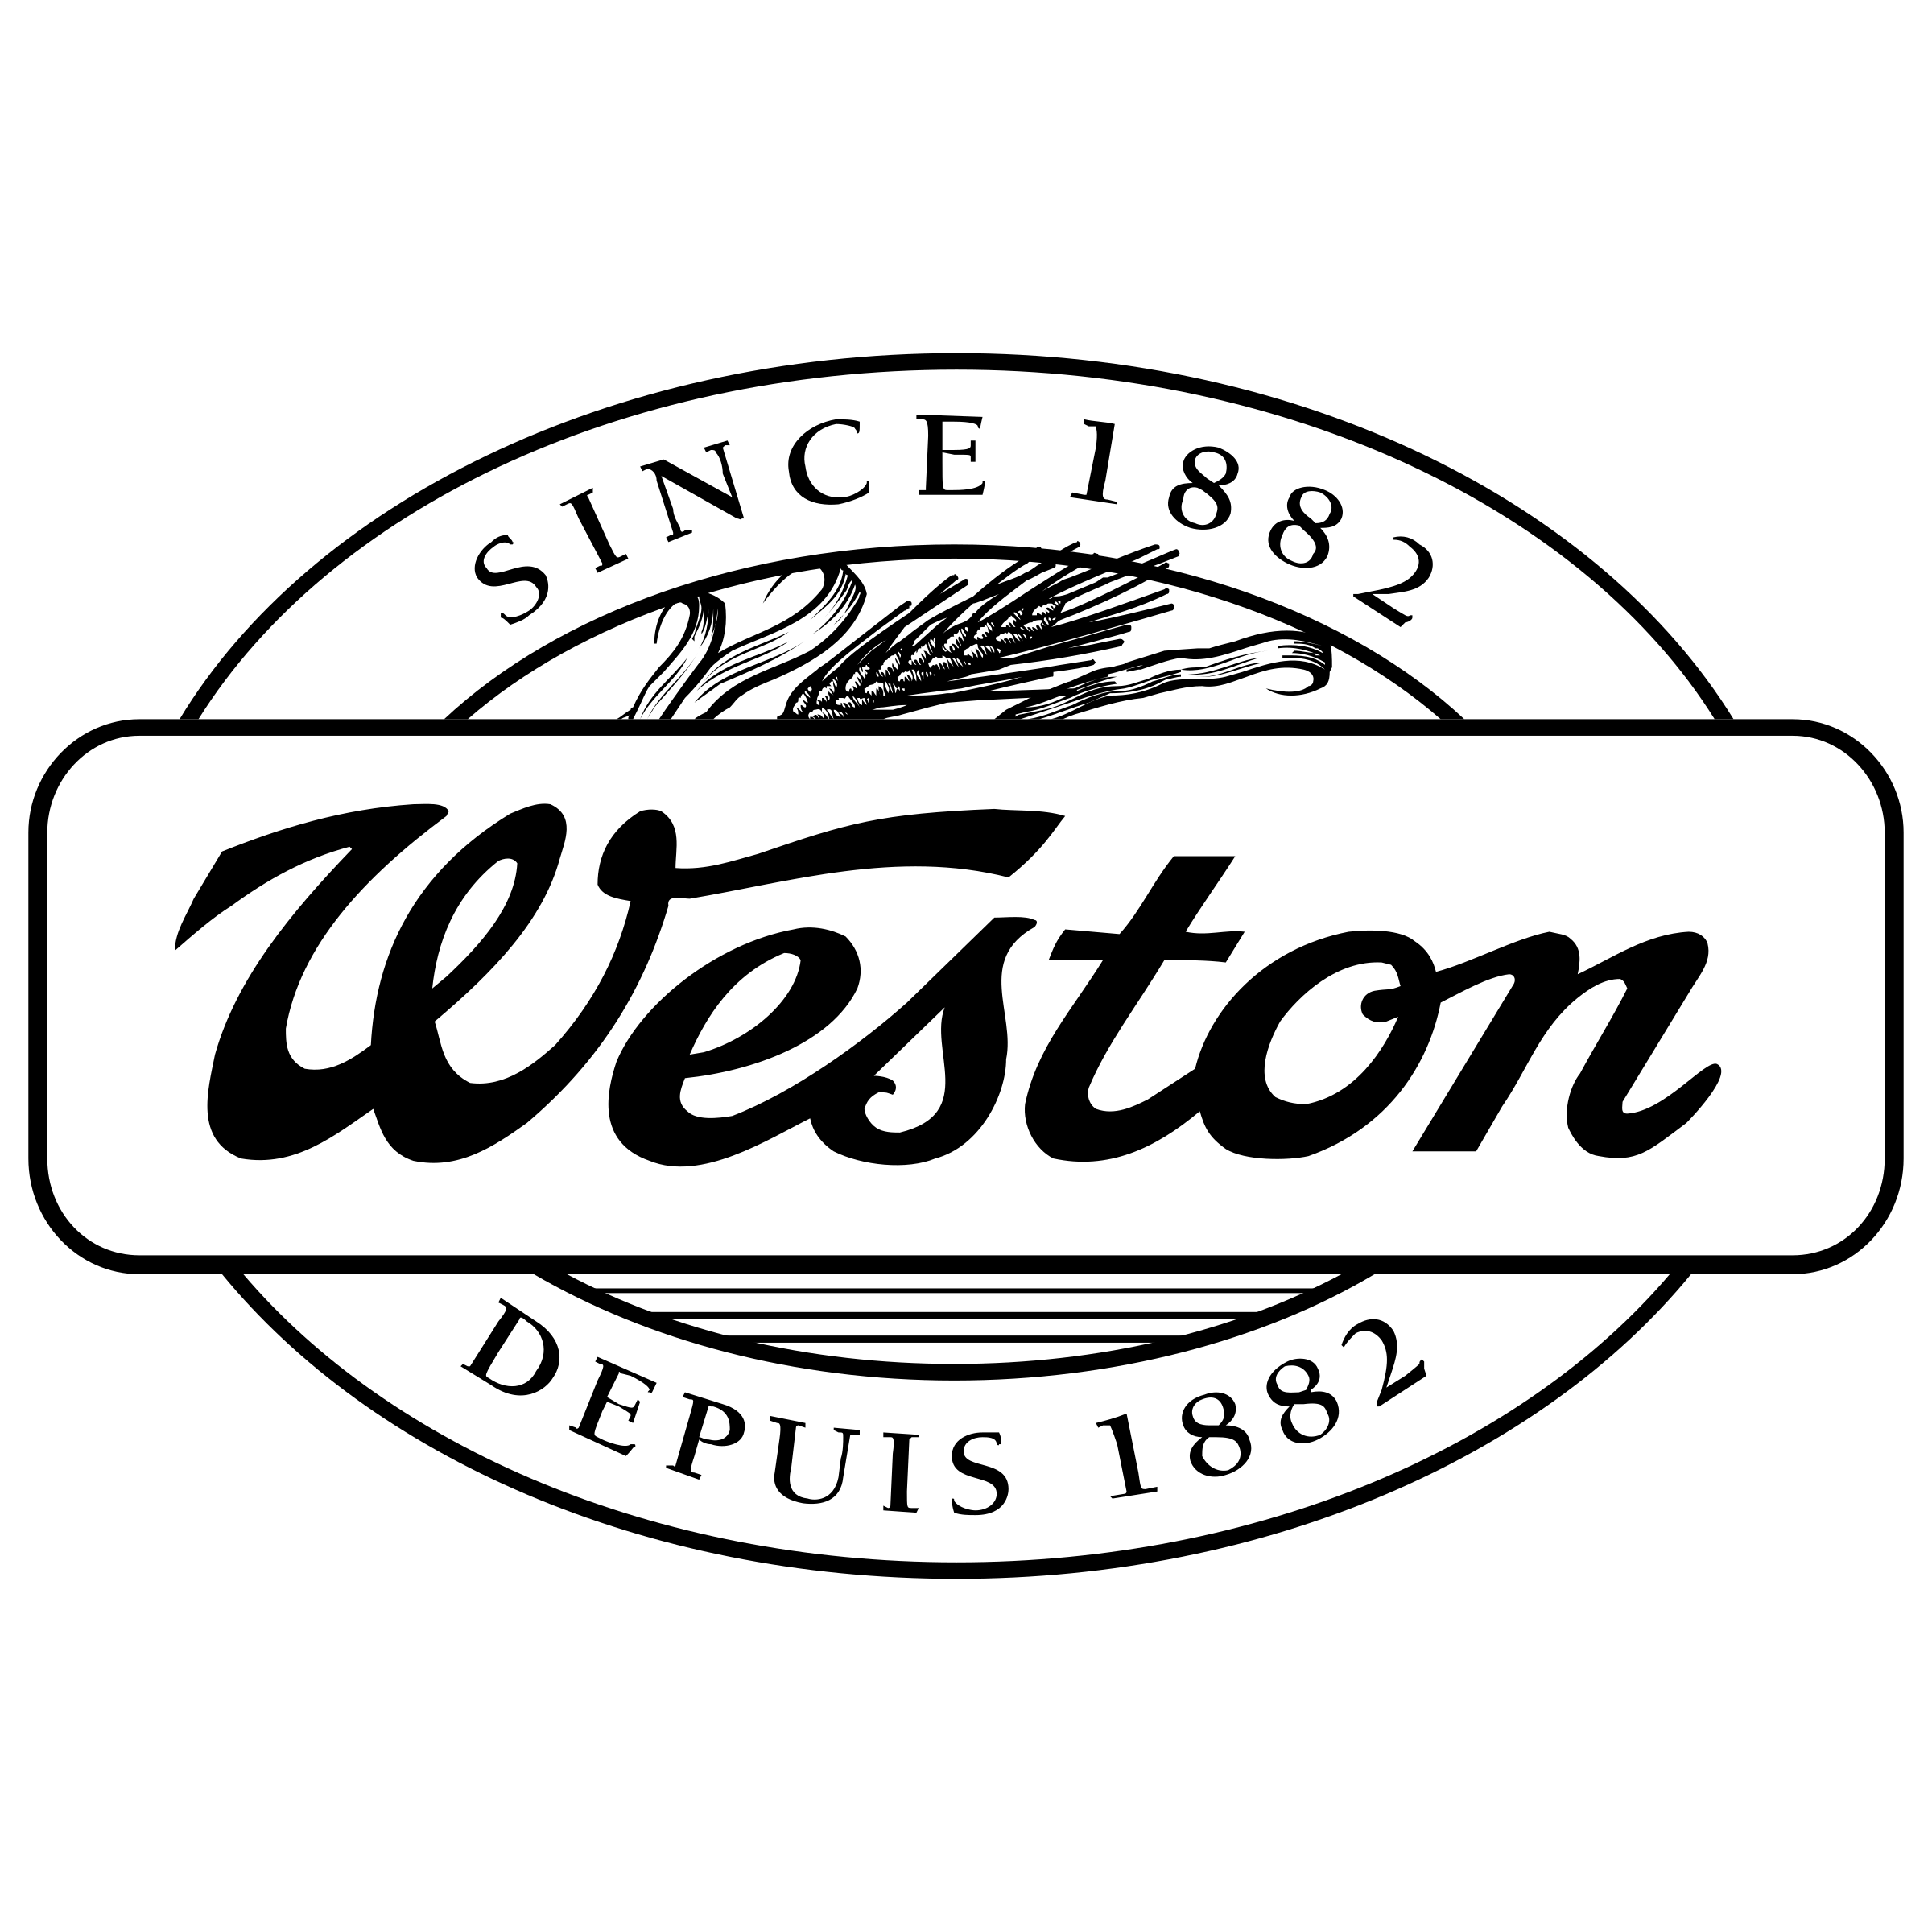 Weston Logo - Weston Logo PNG Transparent & SVG Vector - Freebie Supply